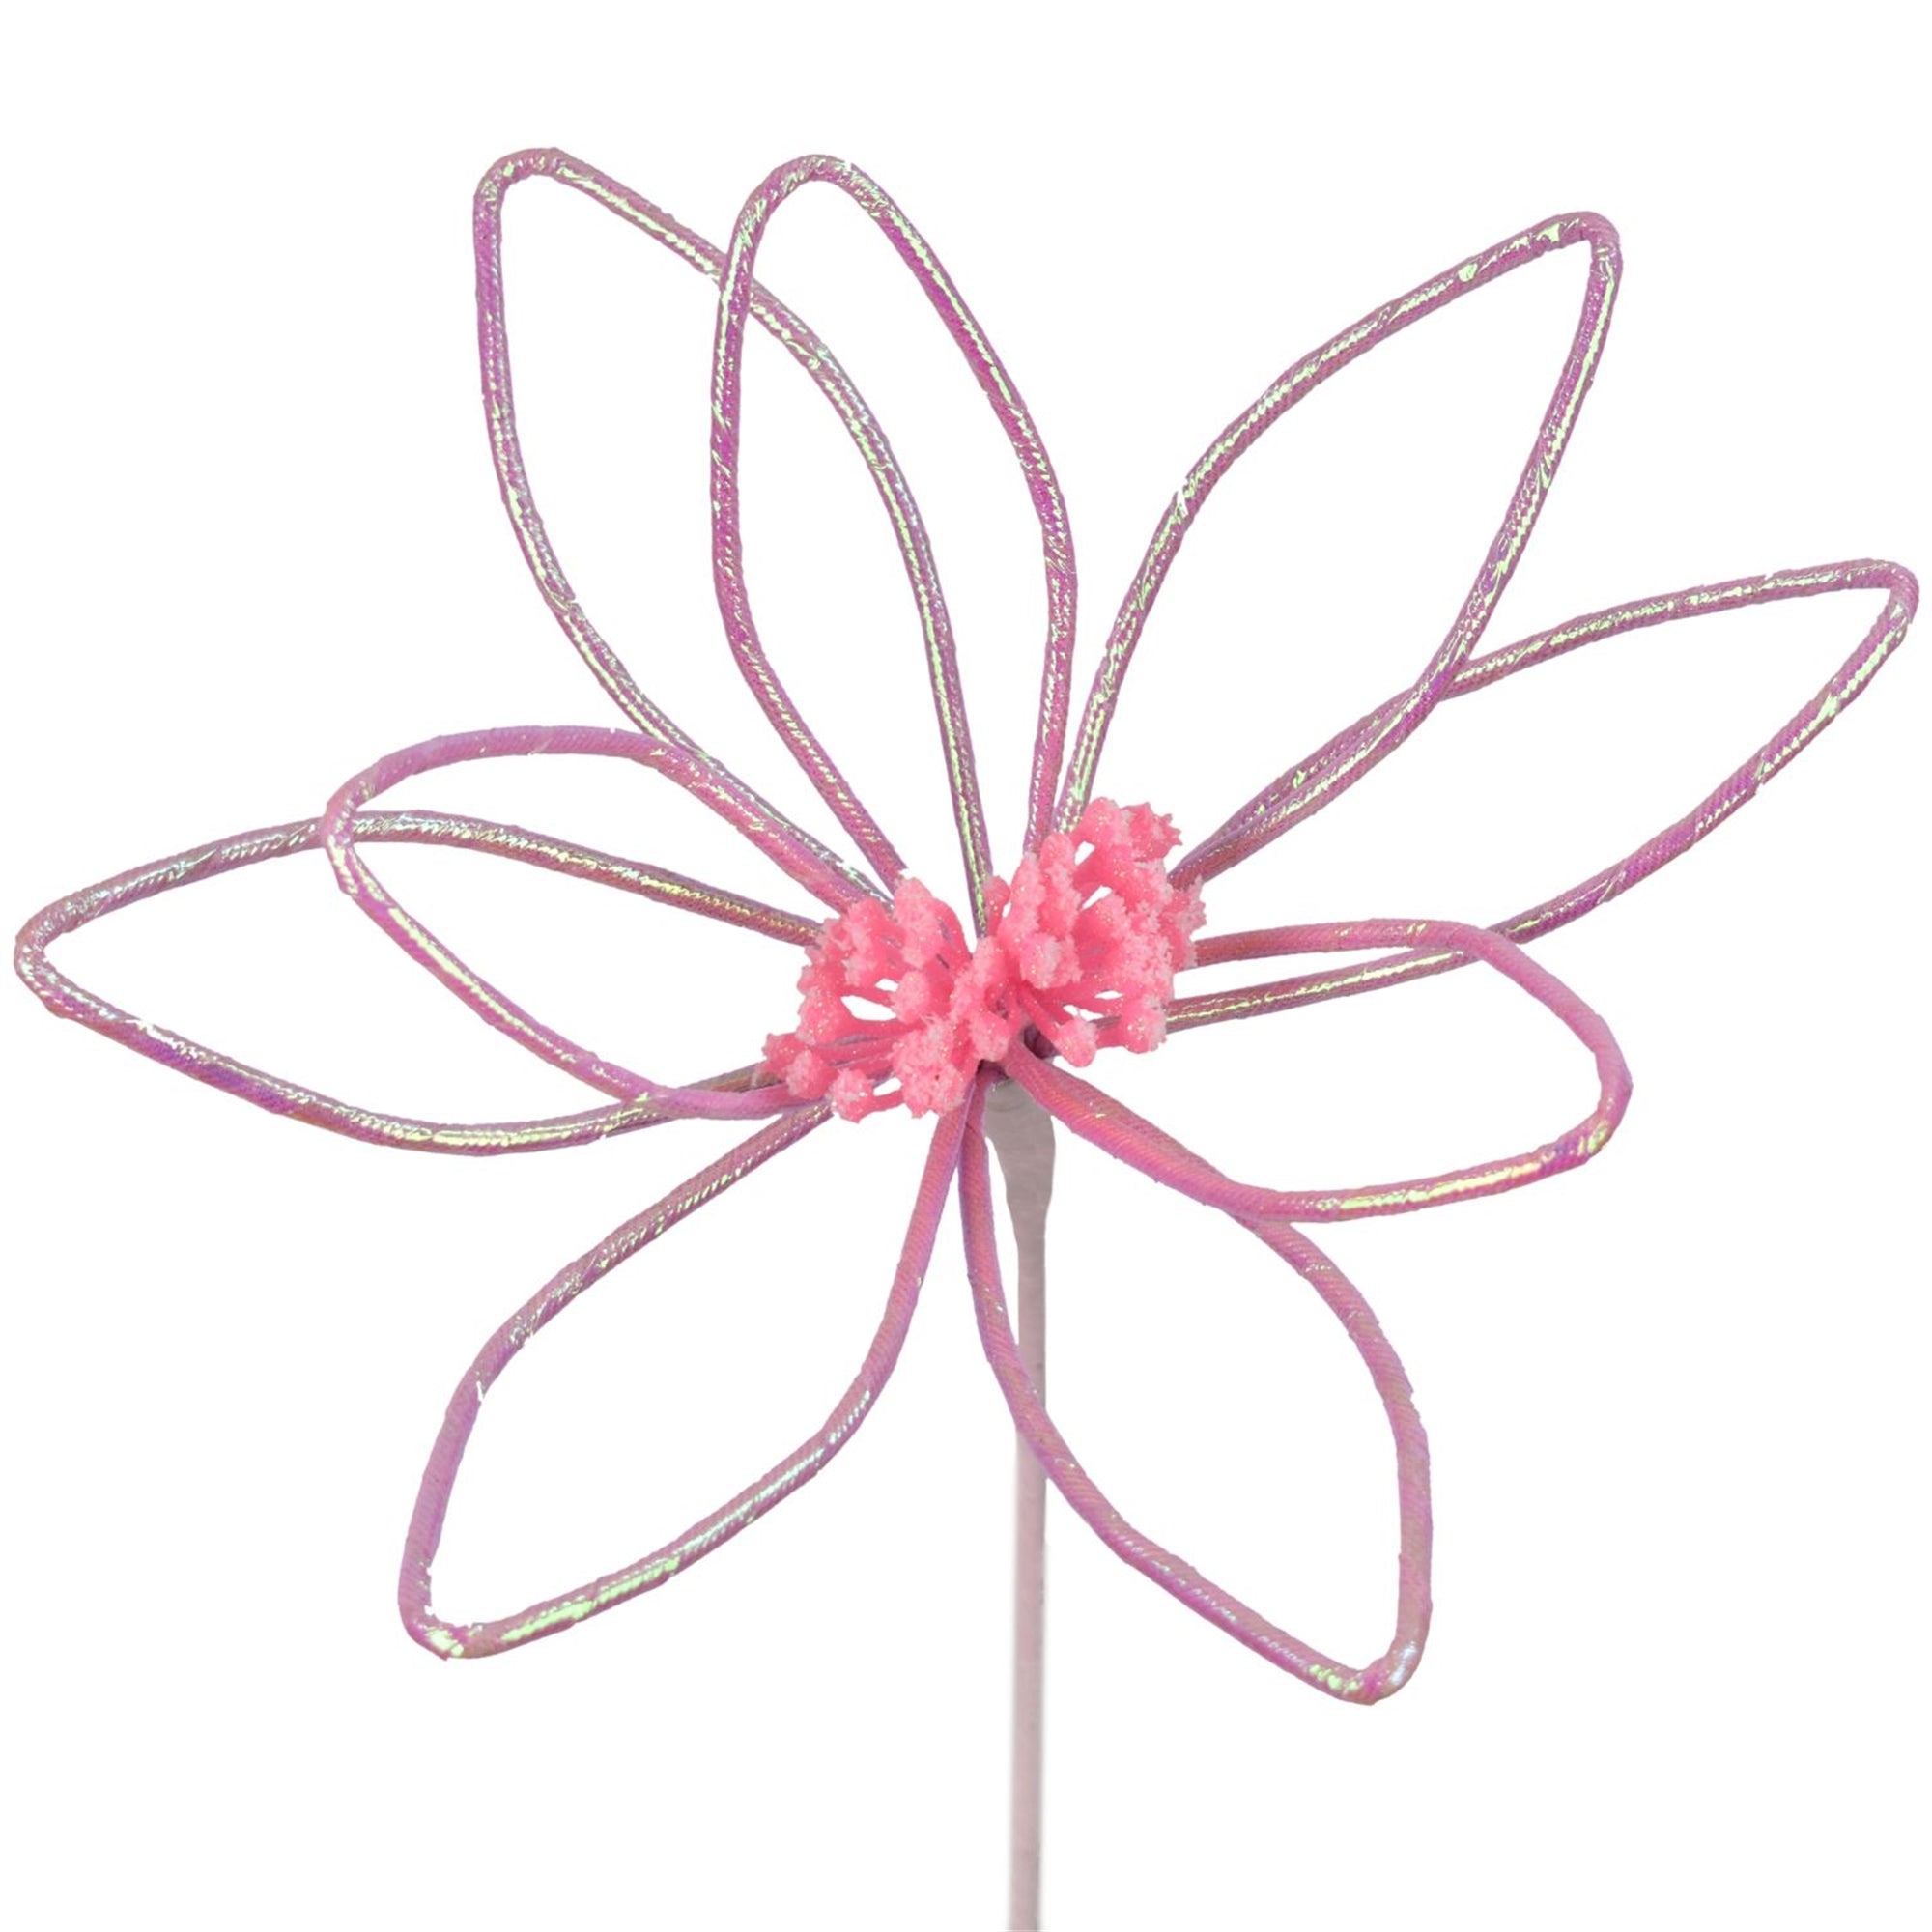 23” Metallic Fabric Wire Poinsettia - Pink